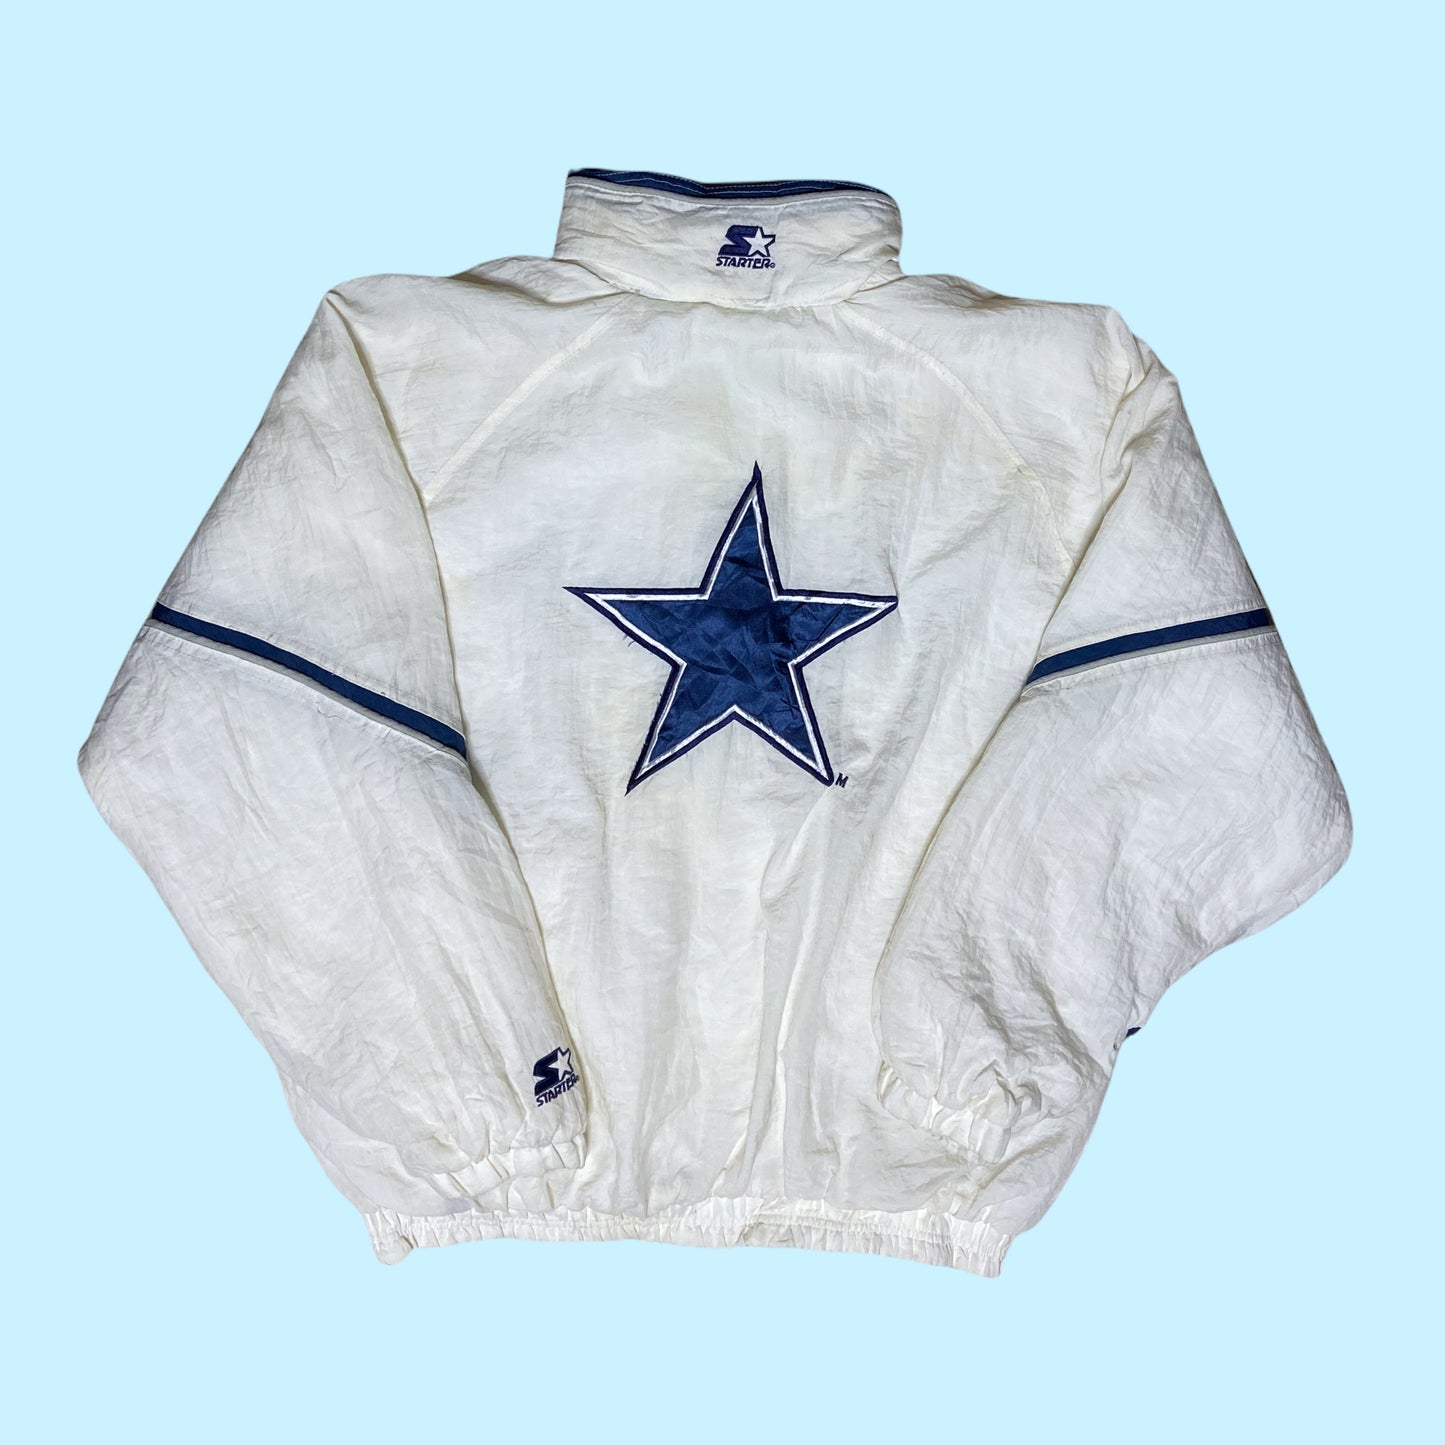 Vintage Starter Dallas Cowboys Jacket - XL